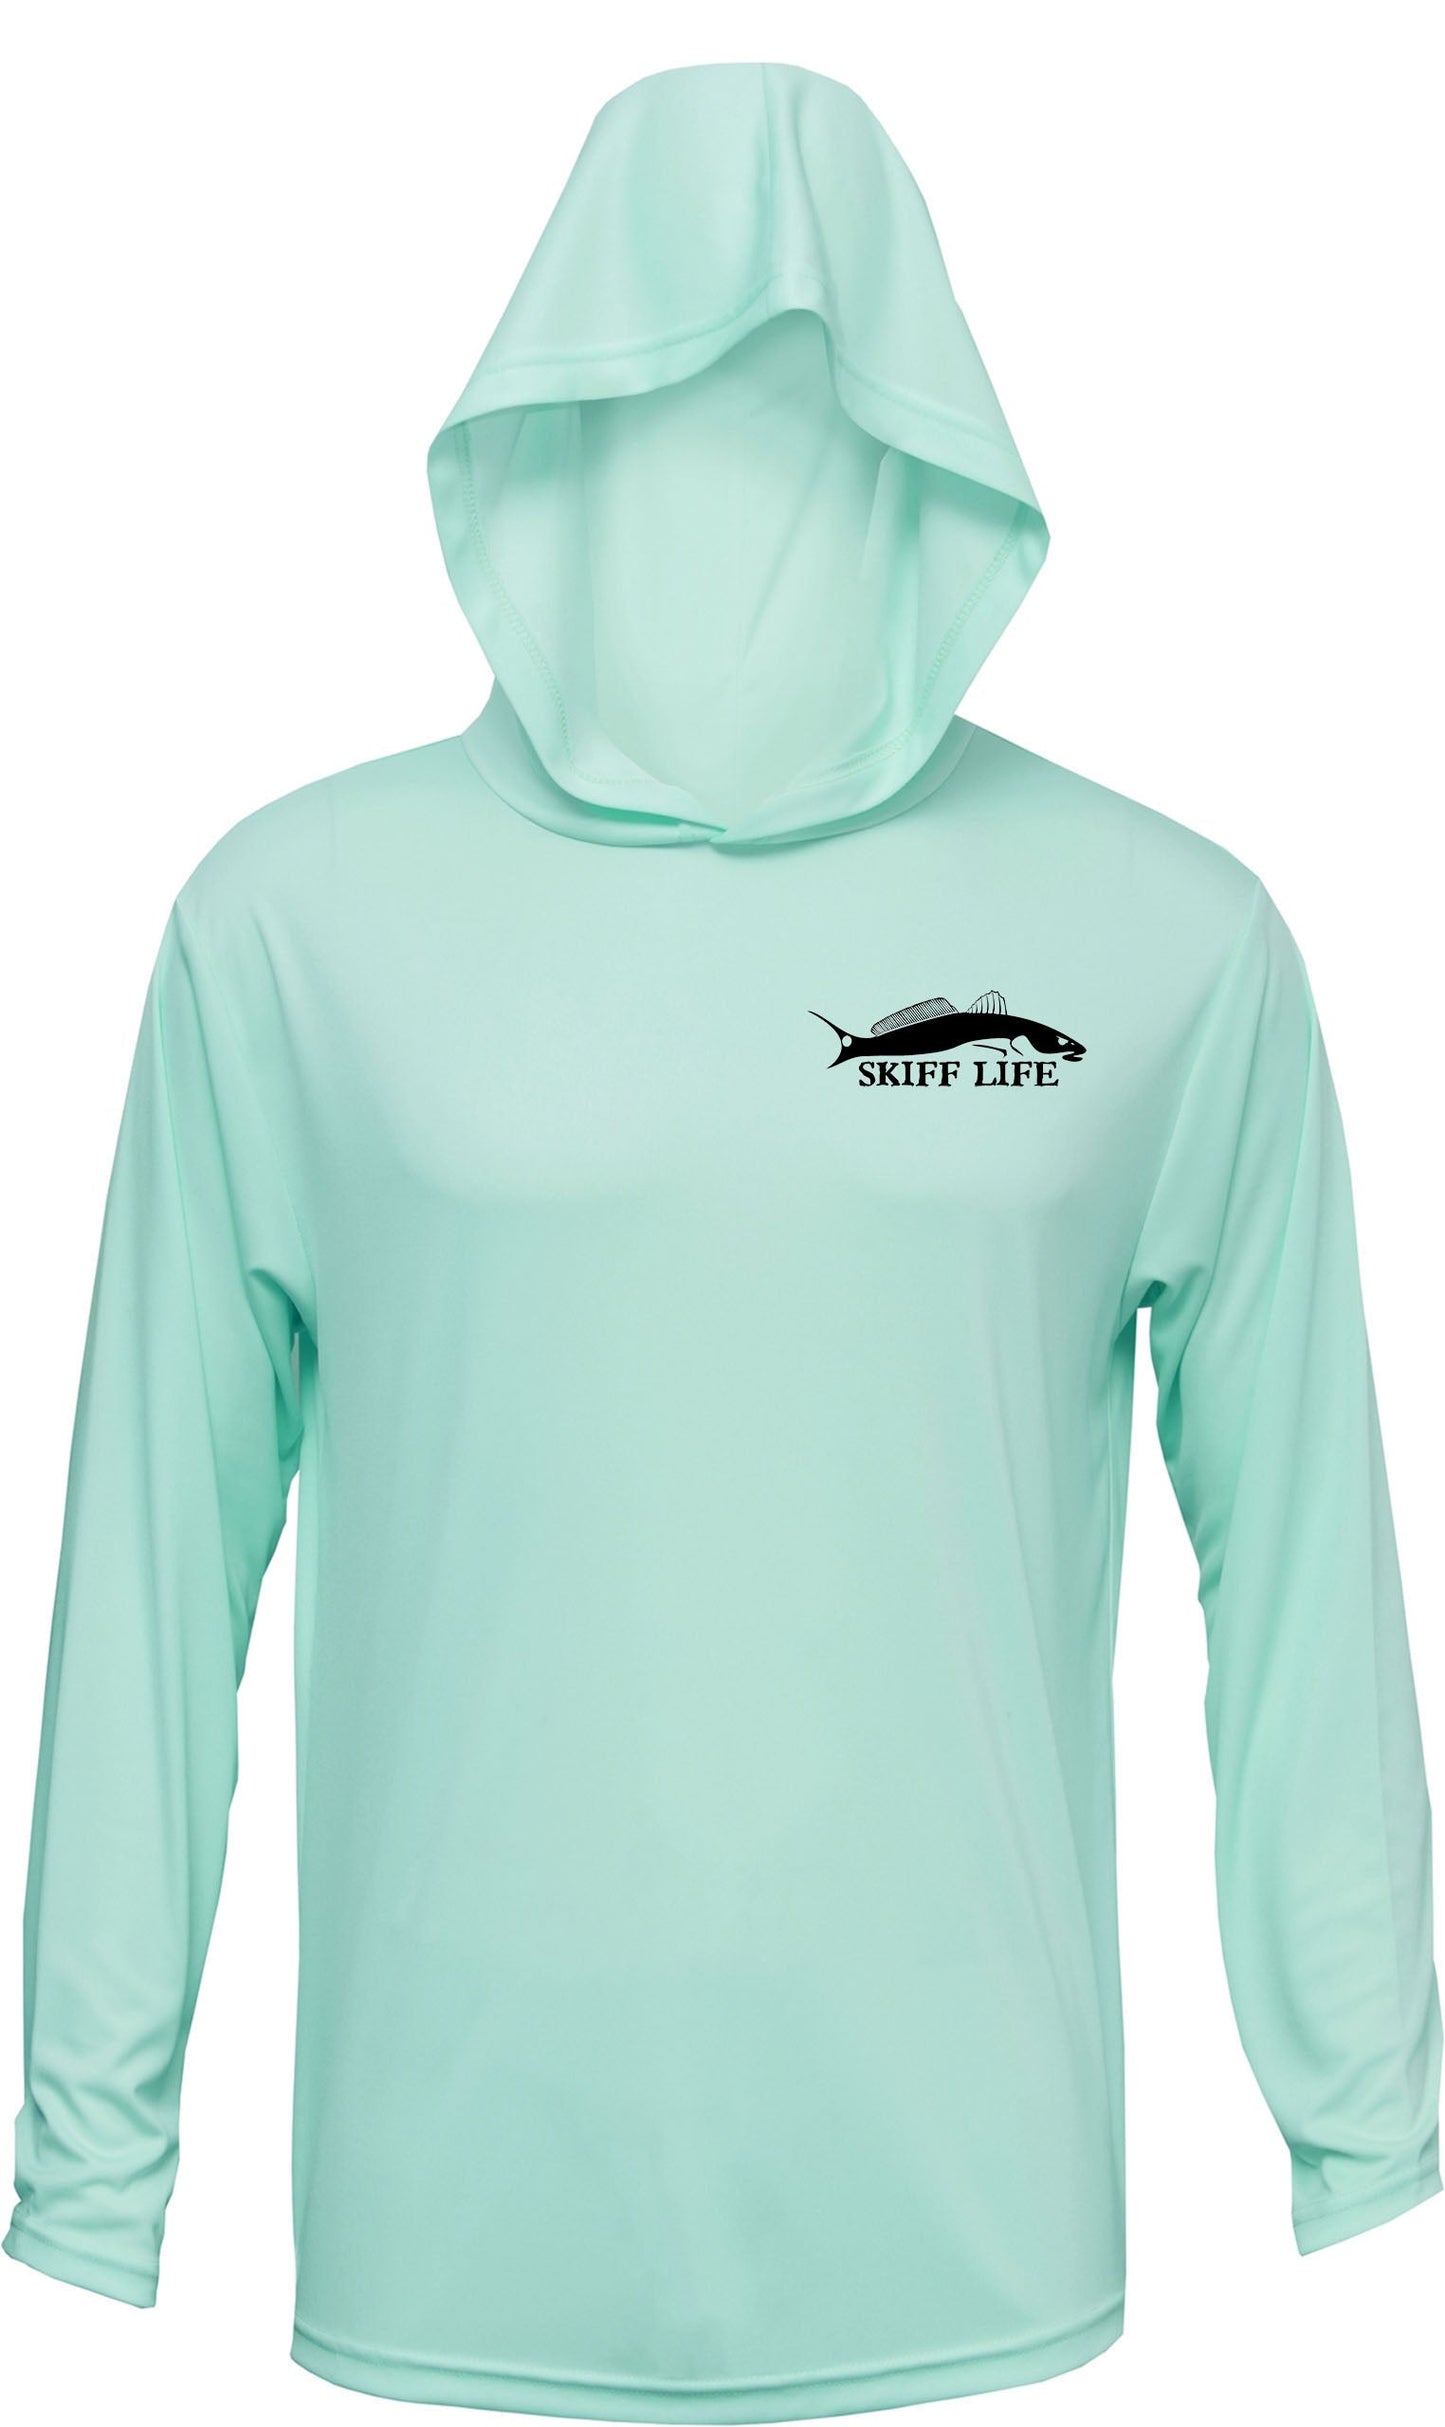 Redfish Fishing Hoodie Shirts Men's Quick Dry Lightweight UPF 50+ Long Sleeve Hoodie Shirts Rash Guard Swim Shirts Hiking Shirts Moisture Wicking by Skiff Life - Skiff Life